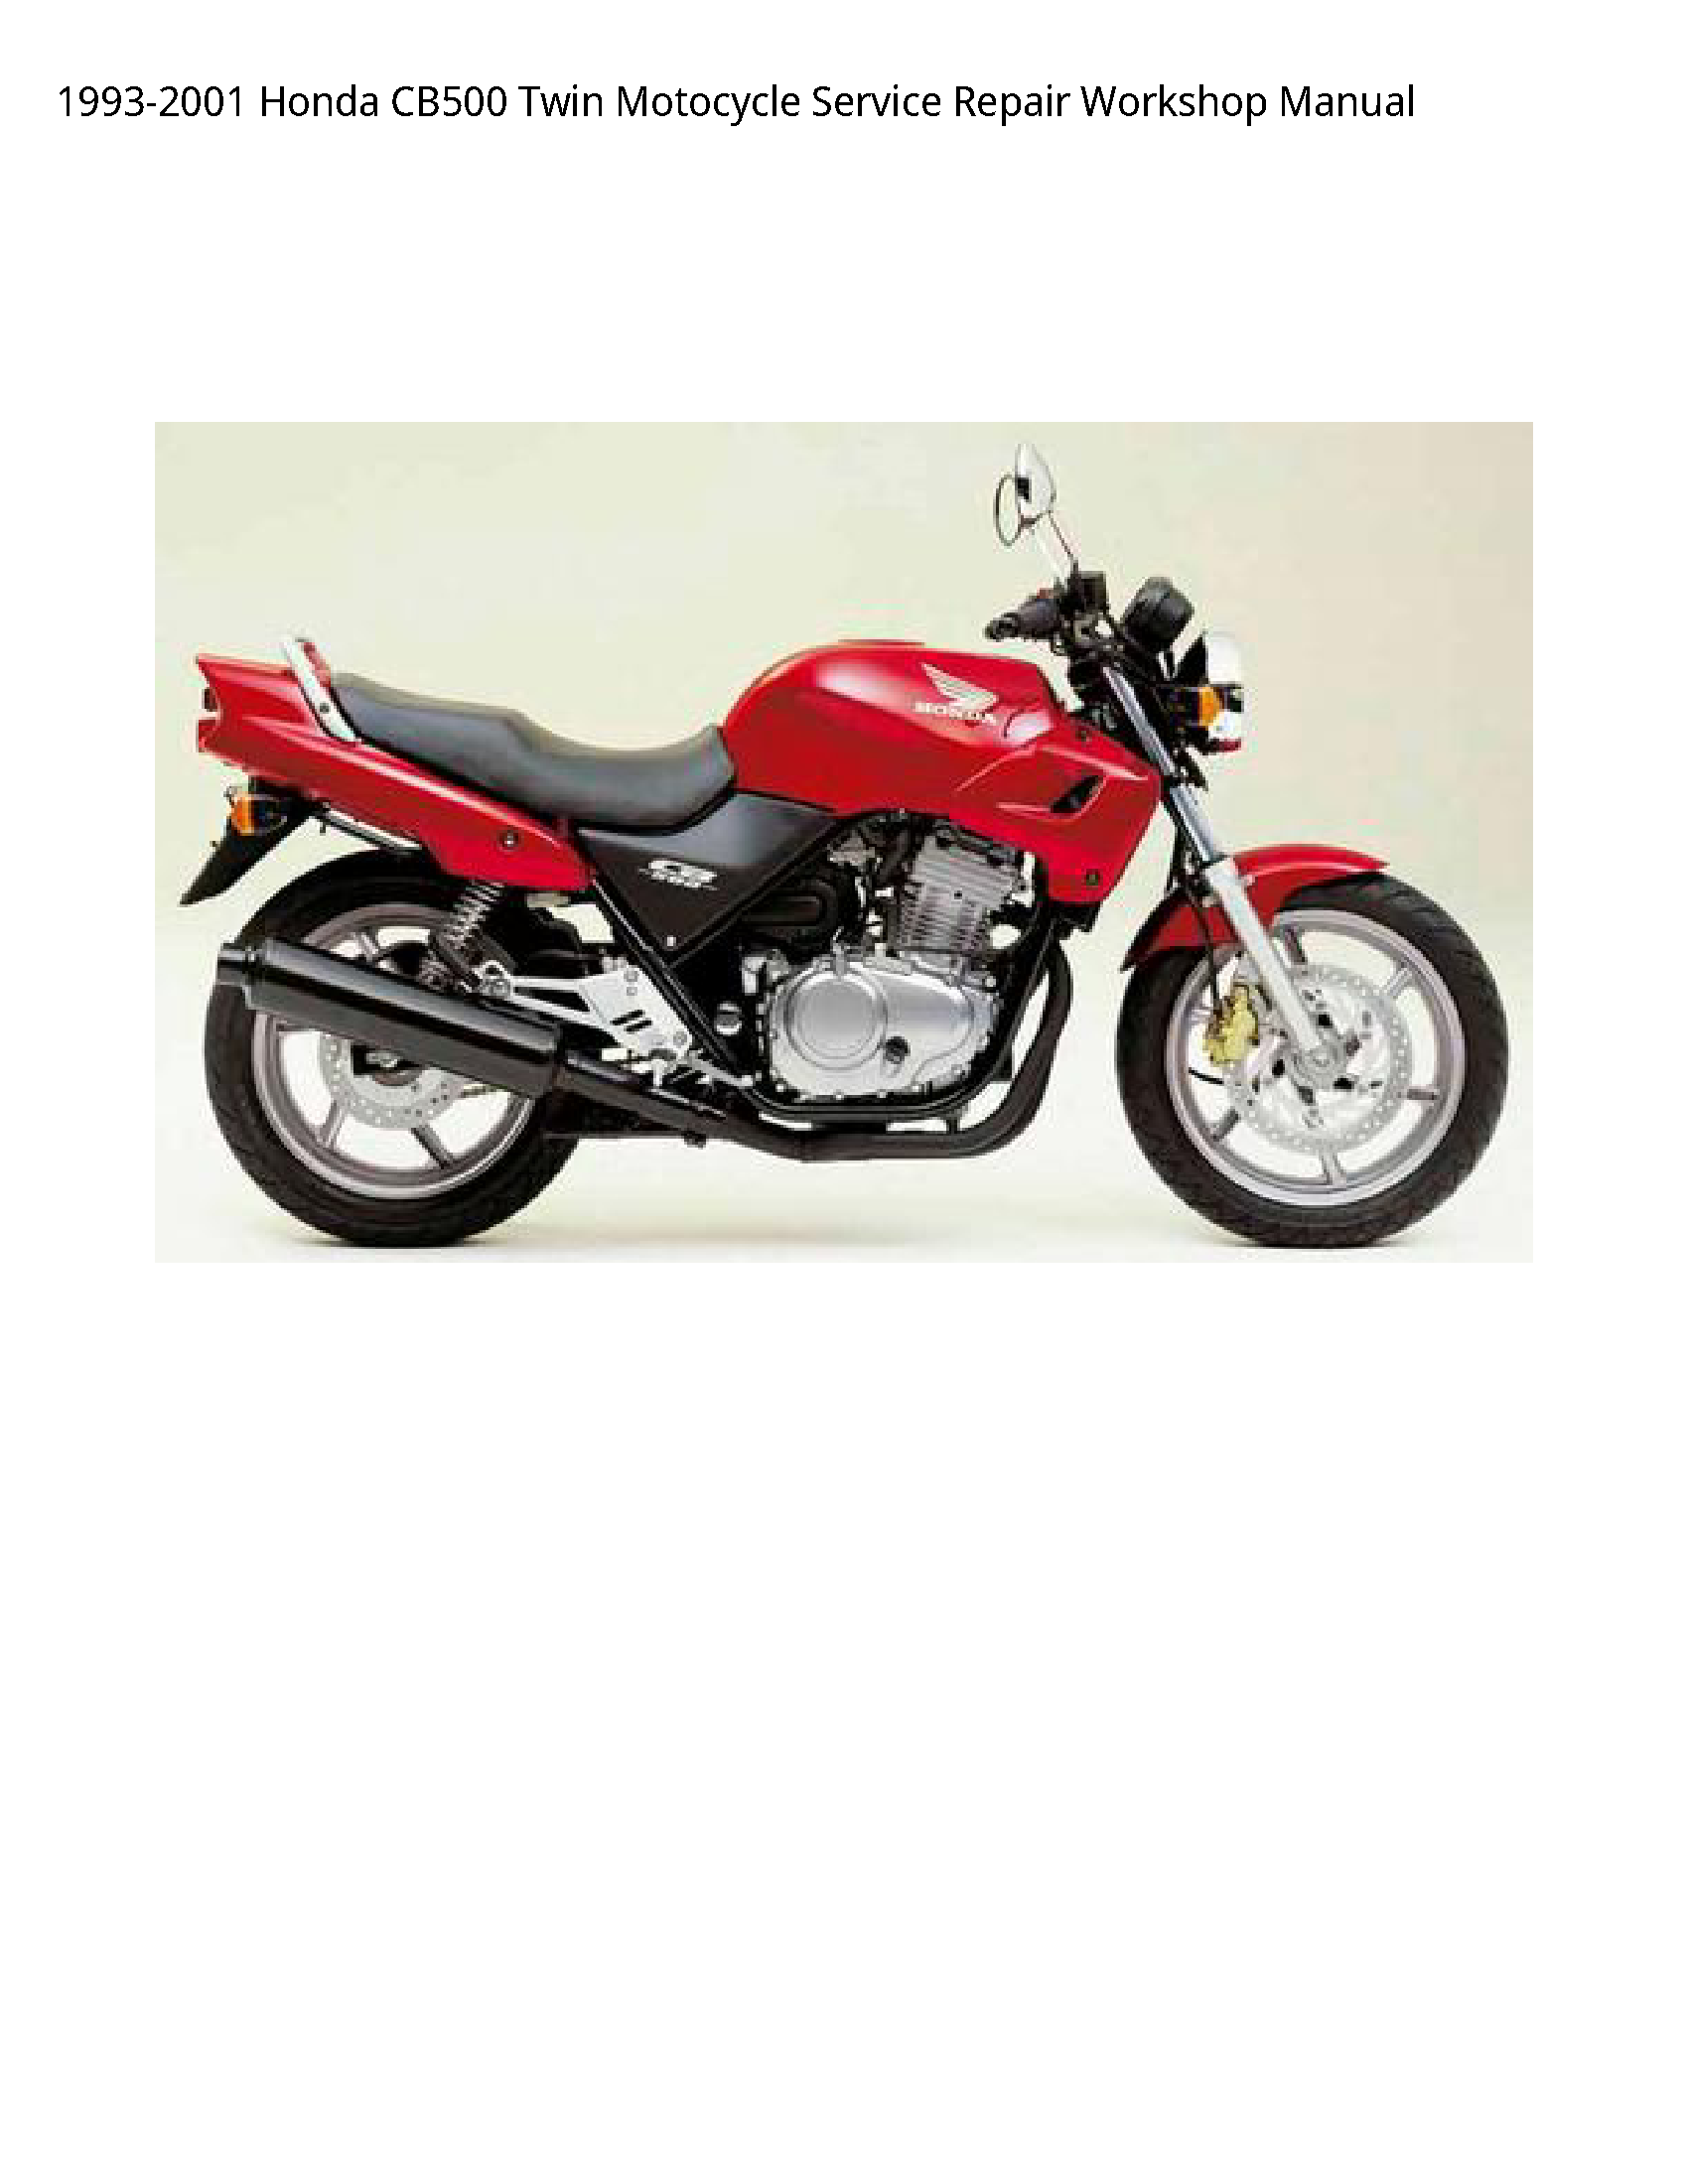 Honda CB500 Twin Motocycle manual